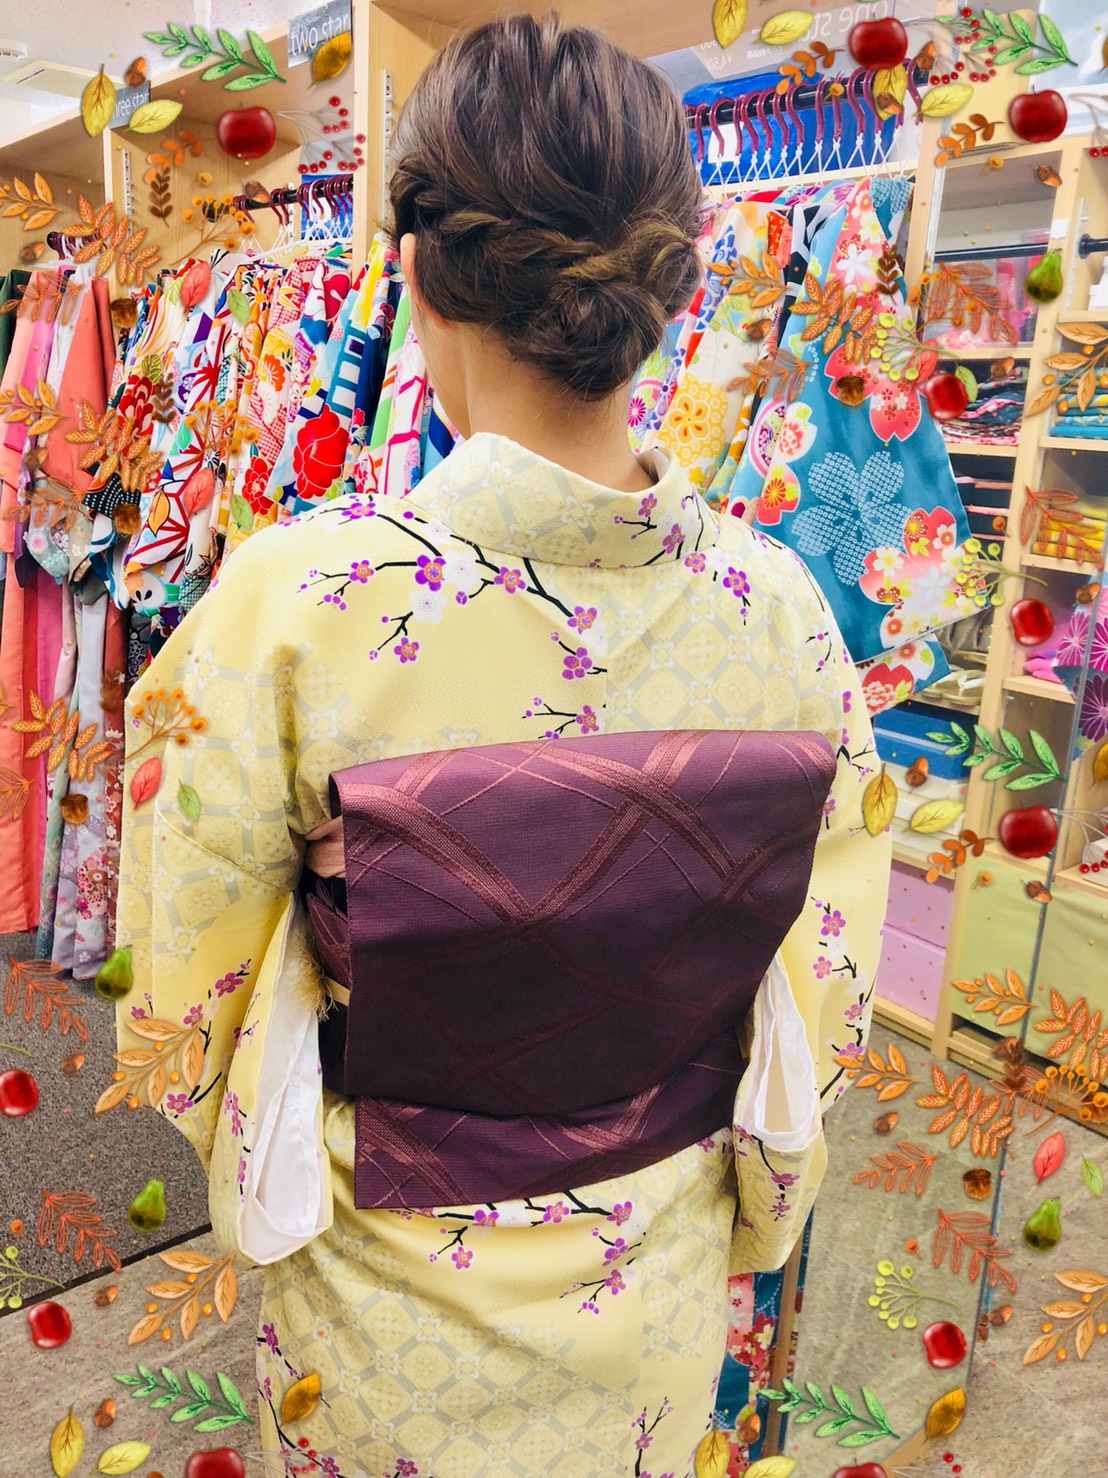 Shop Topics スナックのママ風に 着物レンタルvasara渋谷店 渋谷で着物 浴衣を楽しむなら 着物レンタルvasara